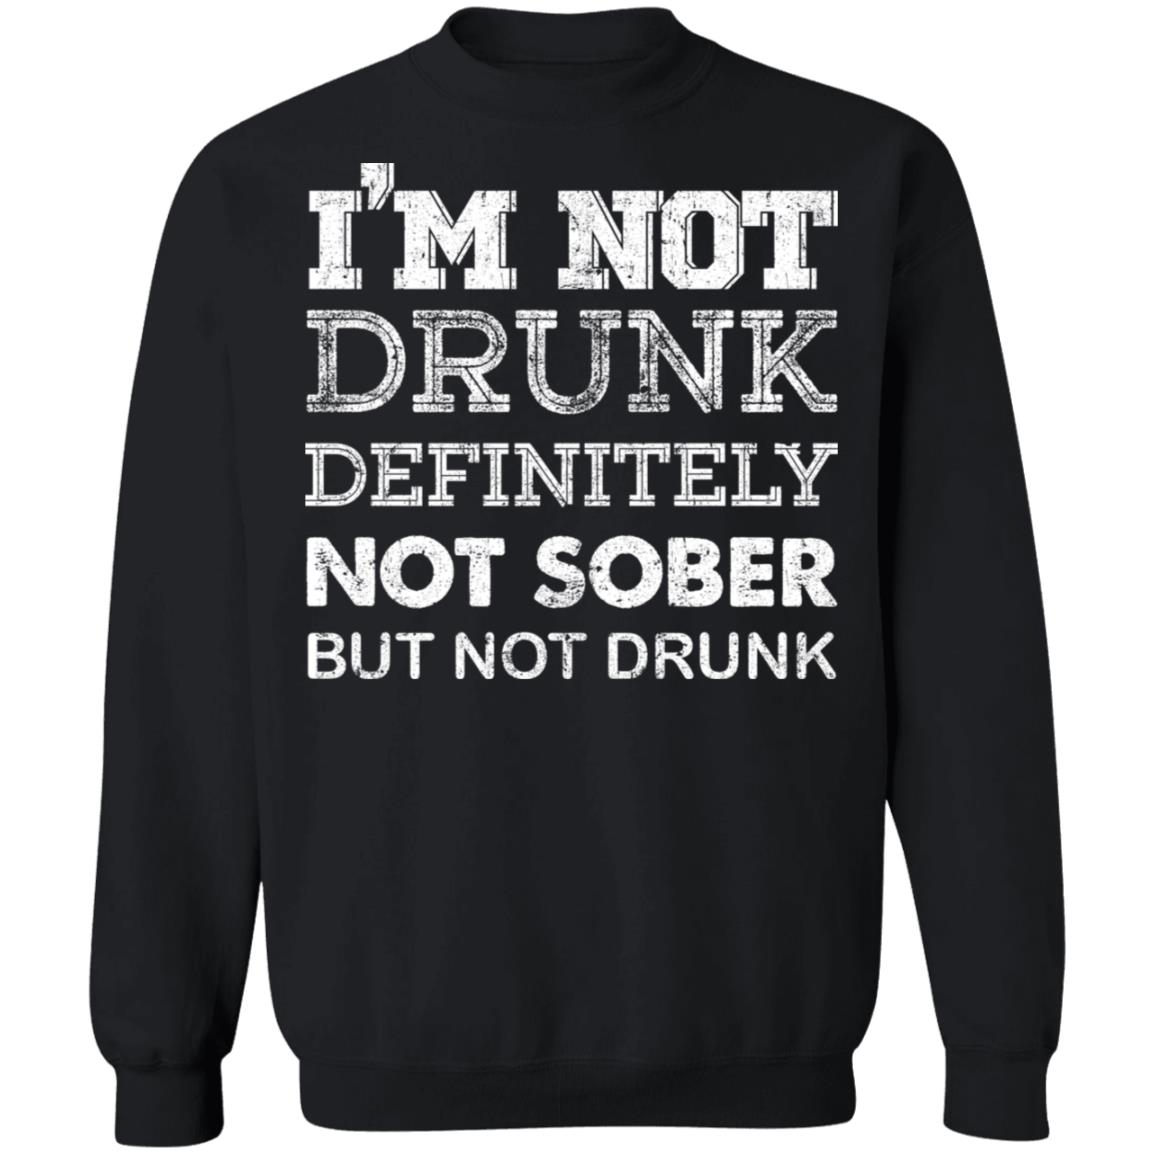 I'm not drunk definitely not sober but not drunk shirt - Rockatee